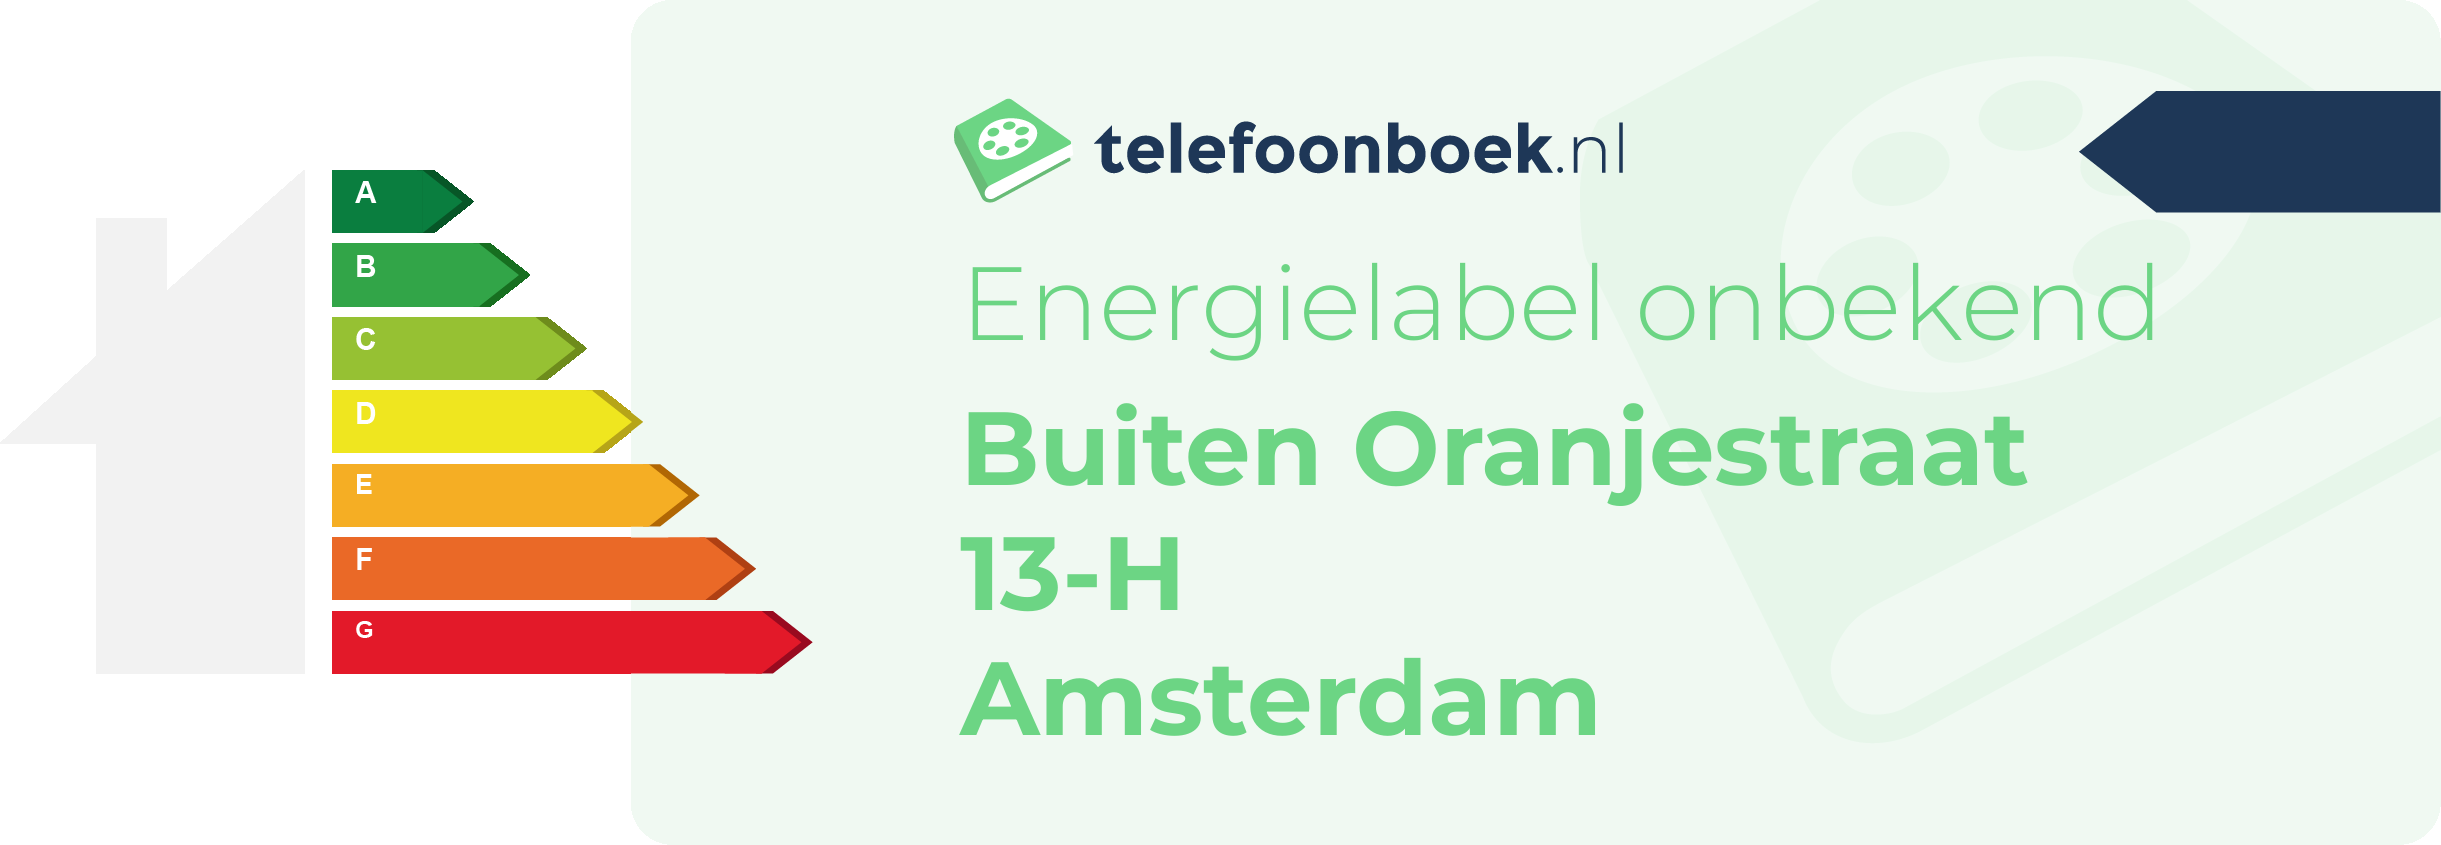 Energielabel Buiten Oranjestraat 13-H Amsterdam